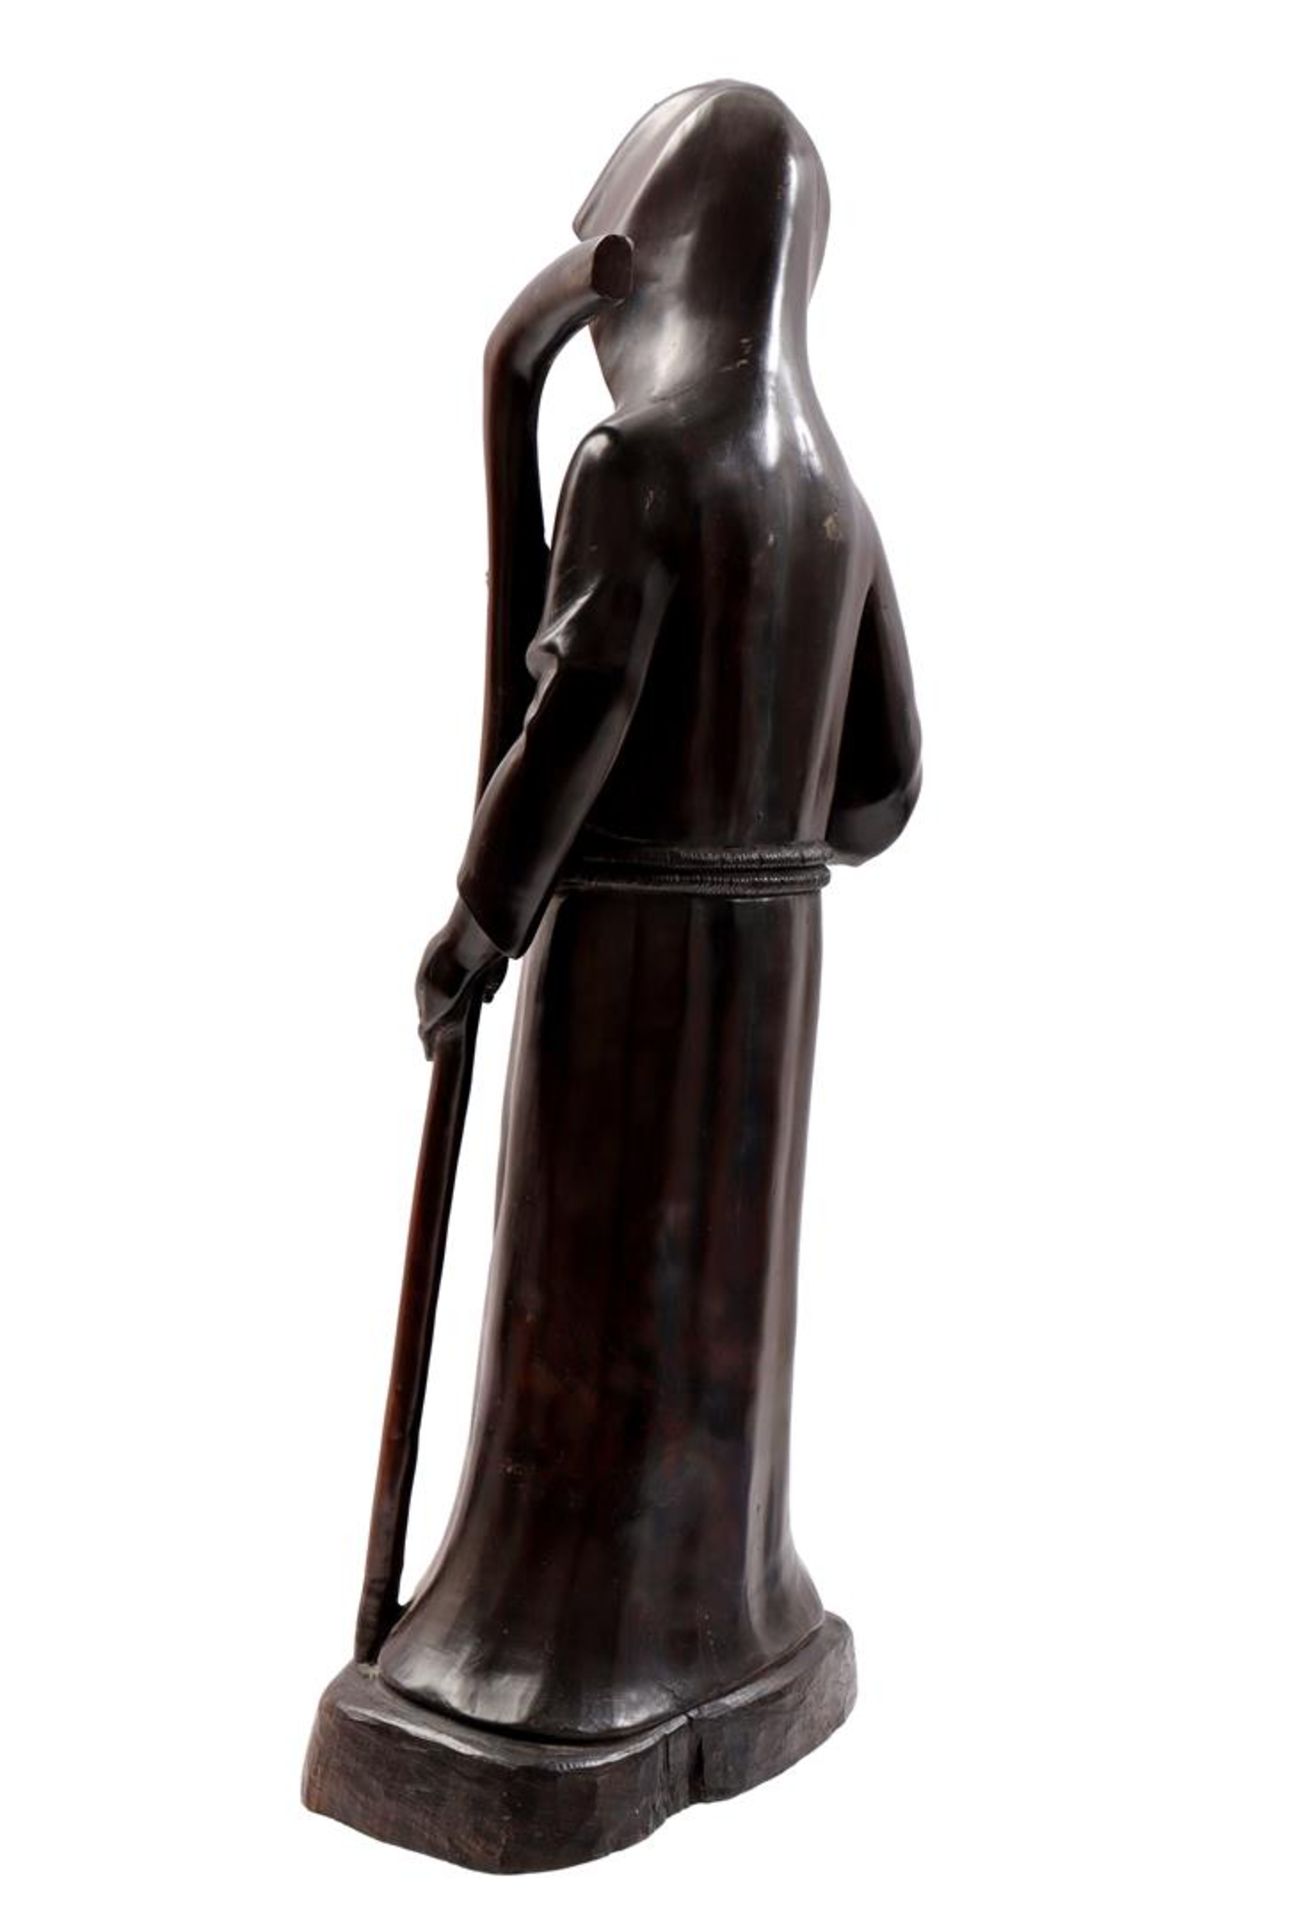 Coromandel wooden statue - Image 7 of 10